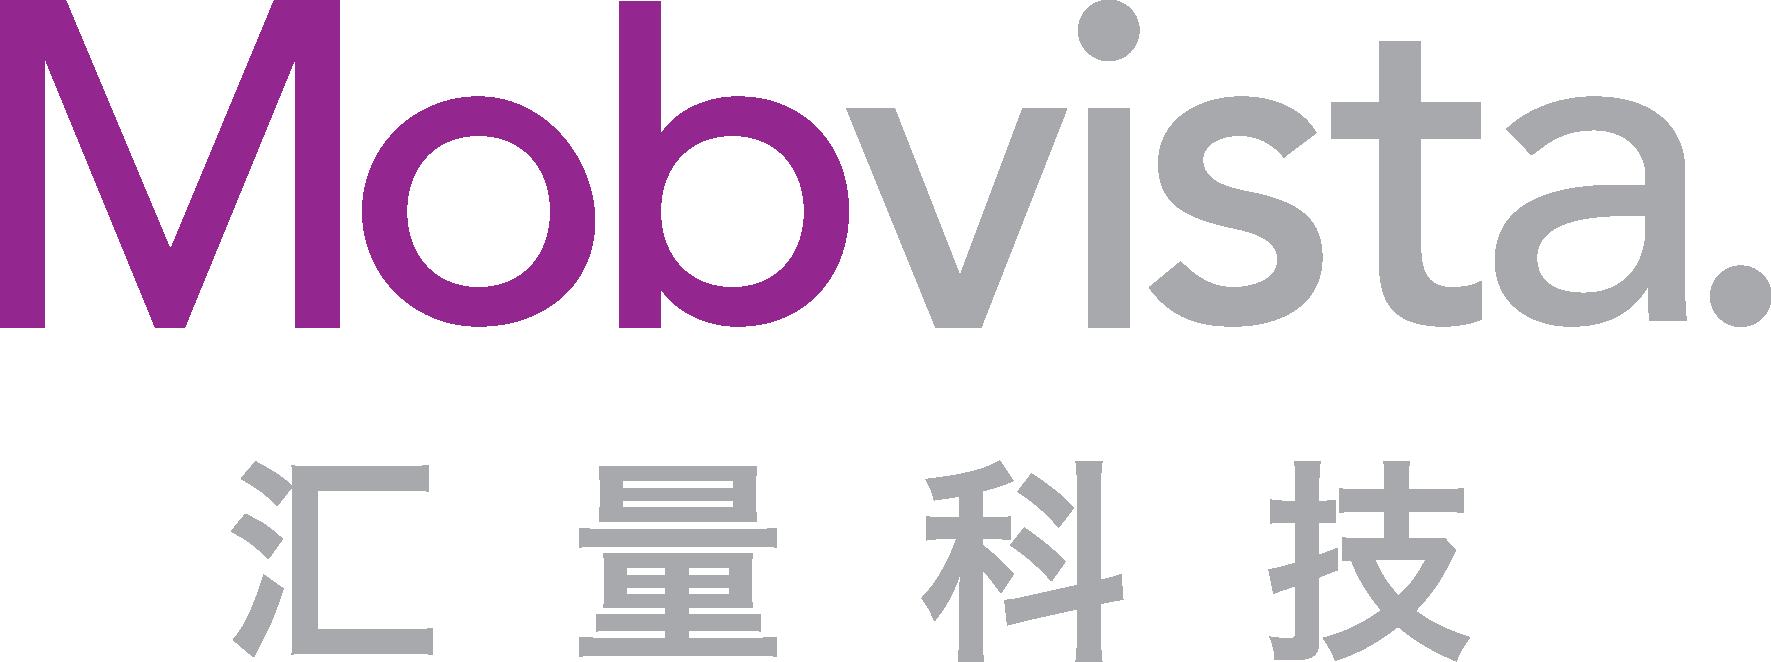 mobvista logo.png